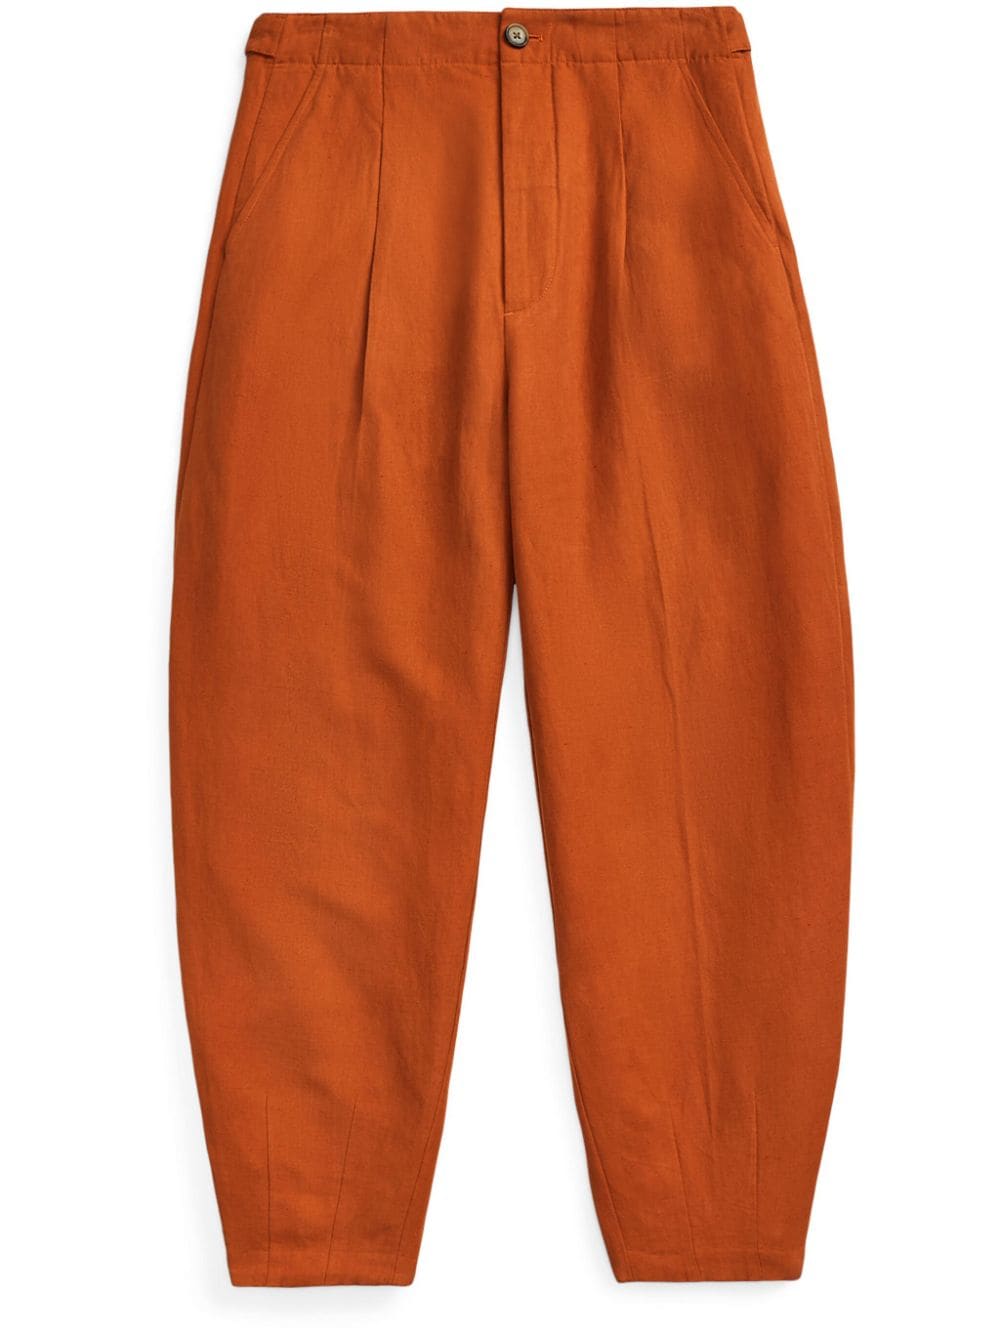 Ralph Lauren Kids wide-leg cotton trousers - Orange